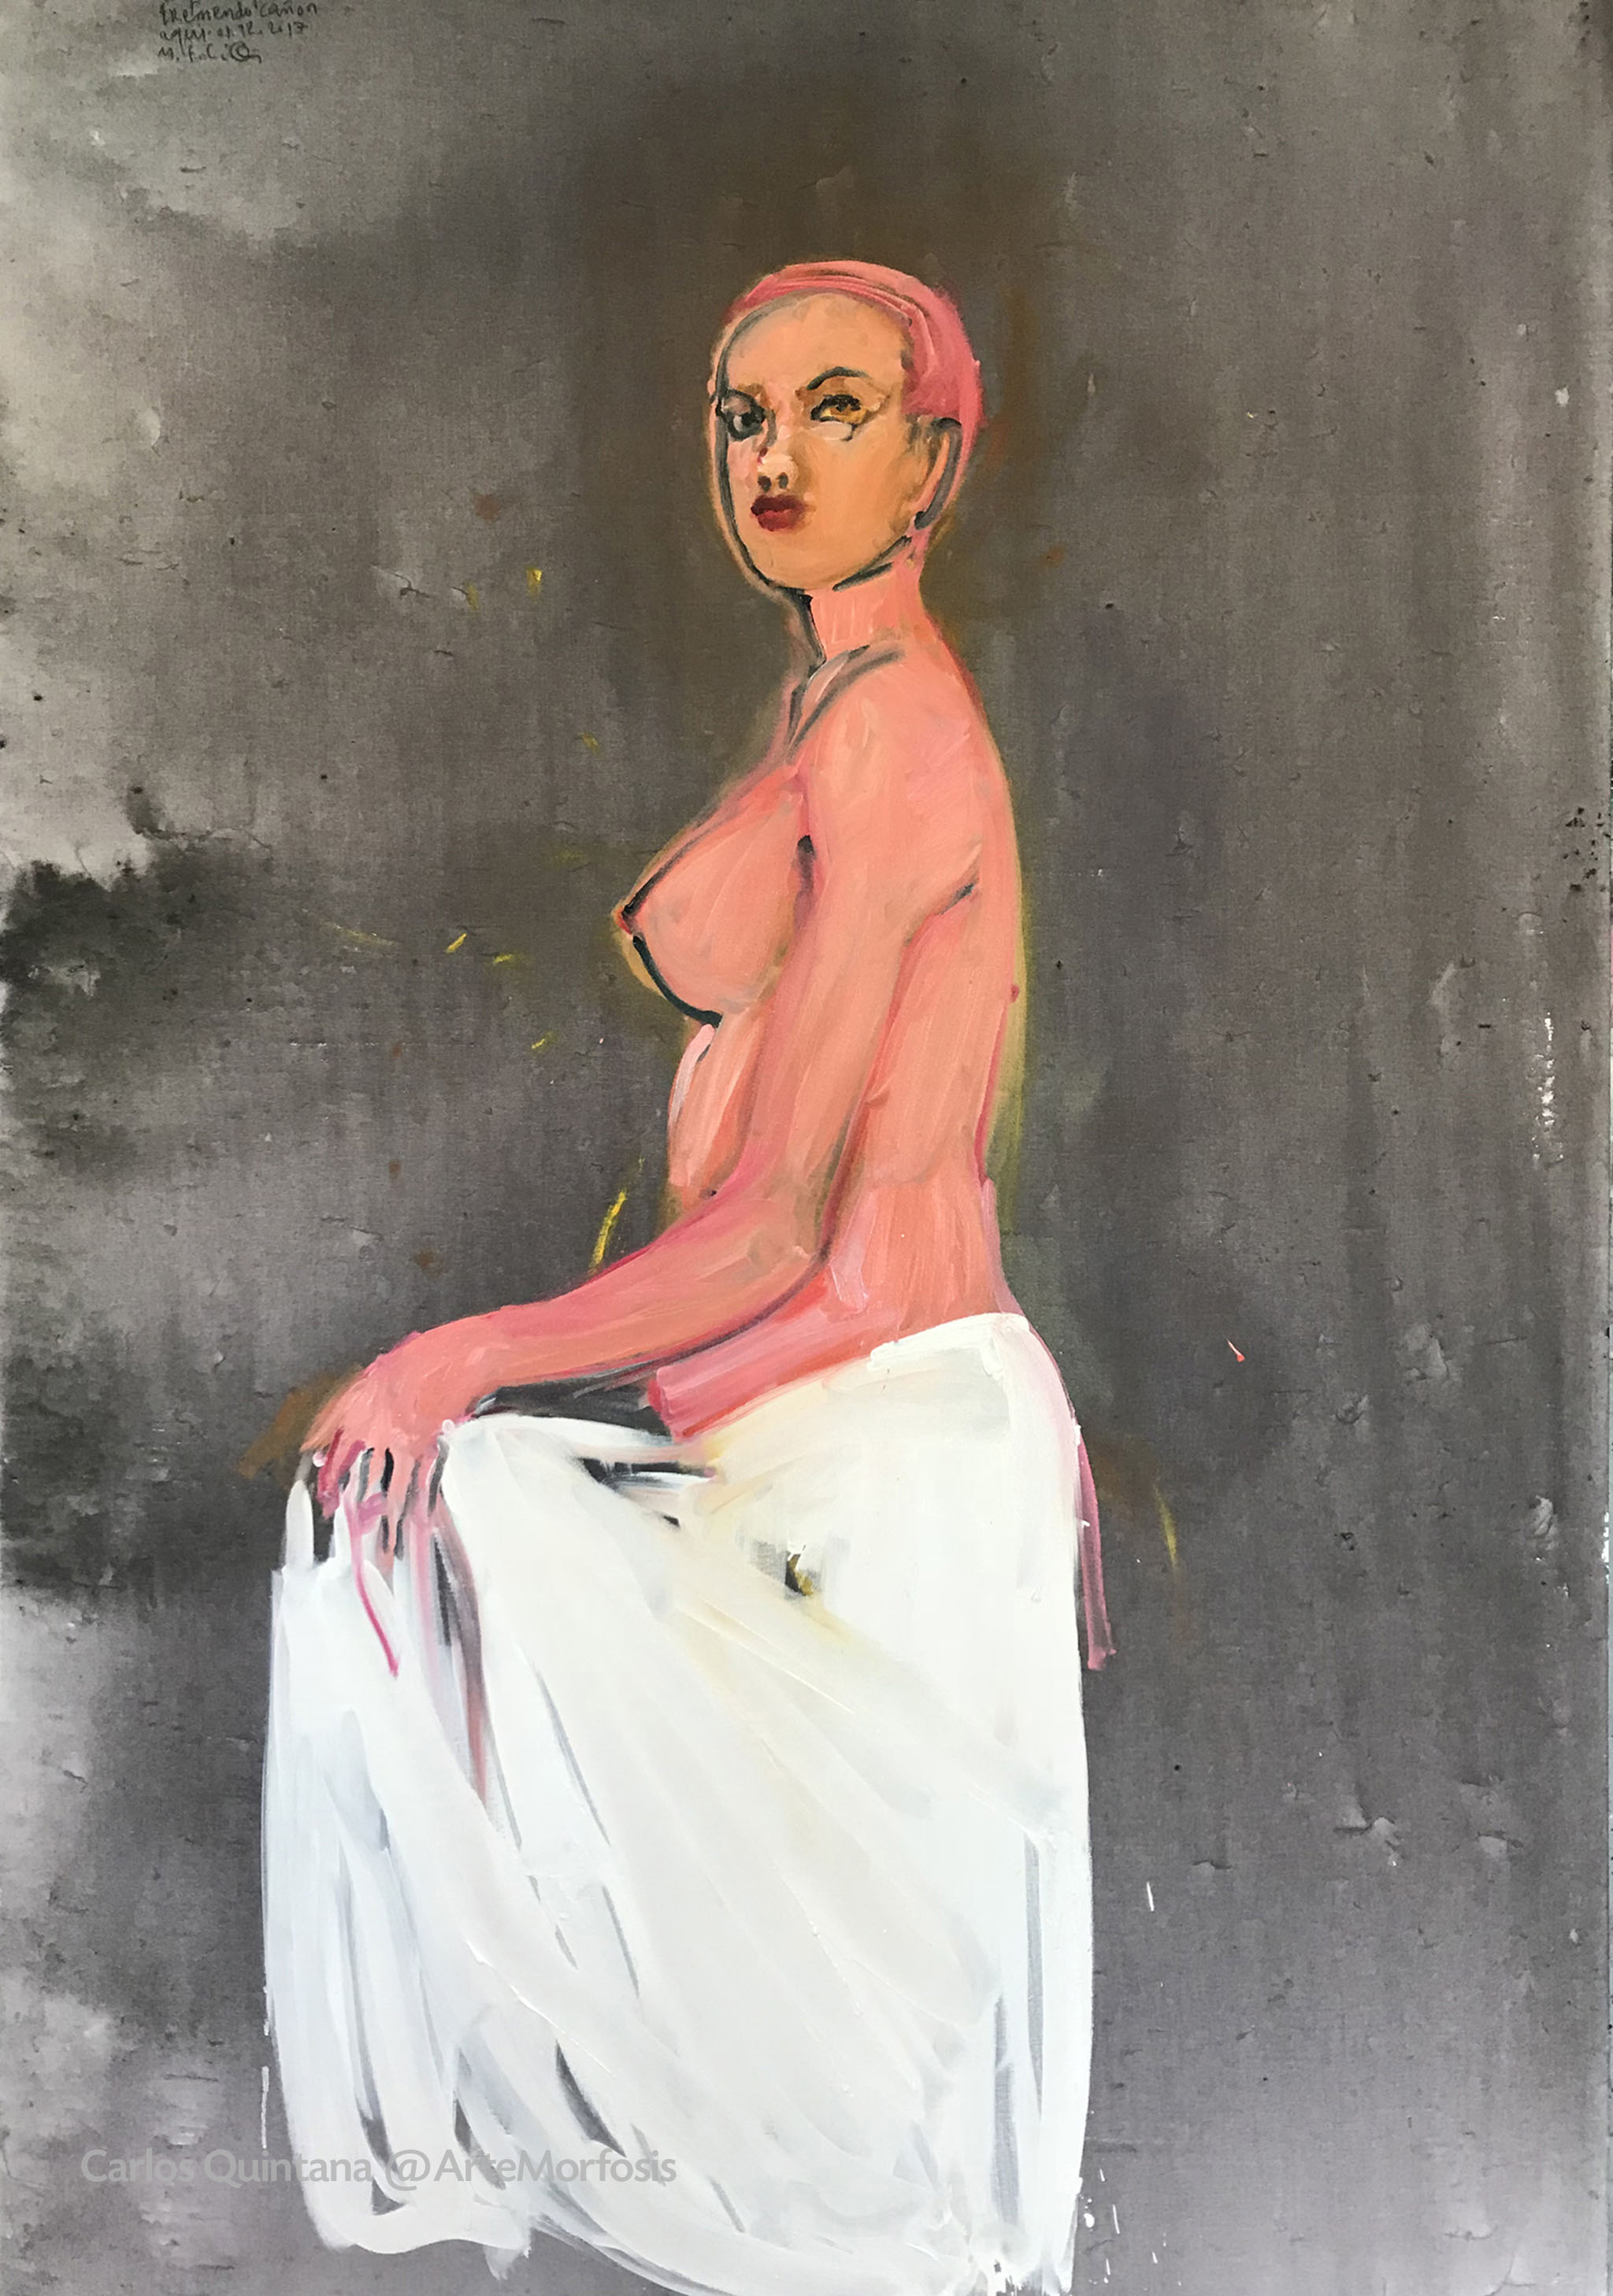 Umwerfende Frau | Lo que tengo es tremendo cañón aquí 2017, Öl, Tinte auf Leinwand | Óleo, tinta sobre tela 183 x 122 cm